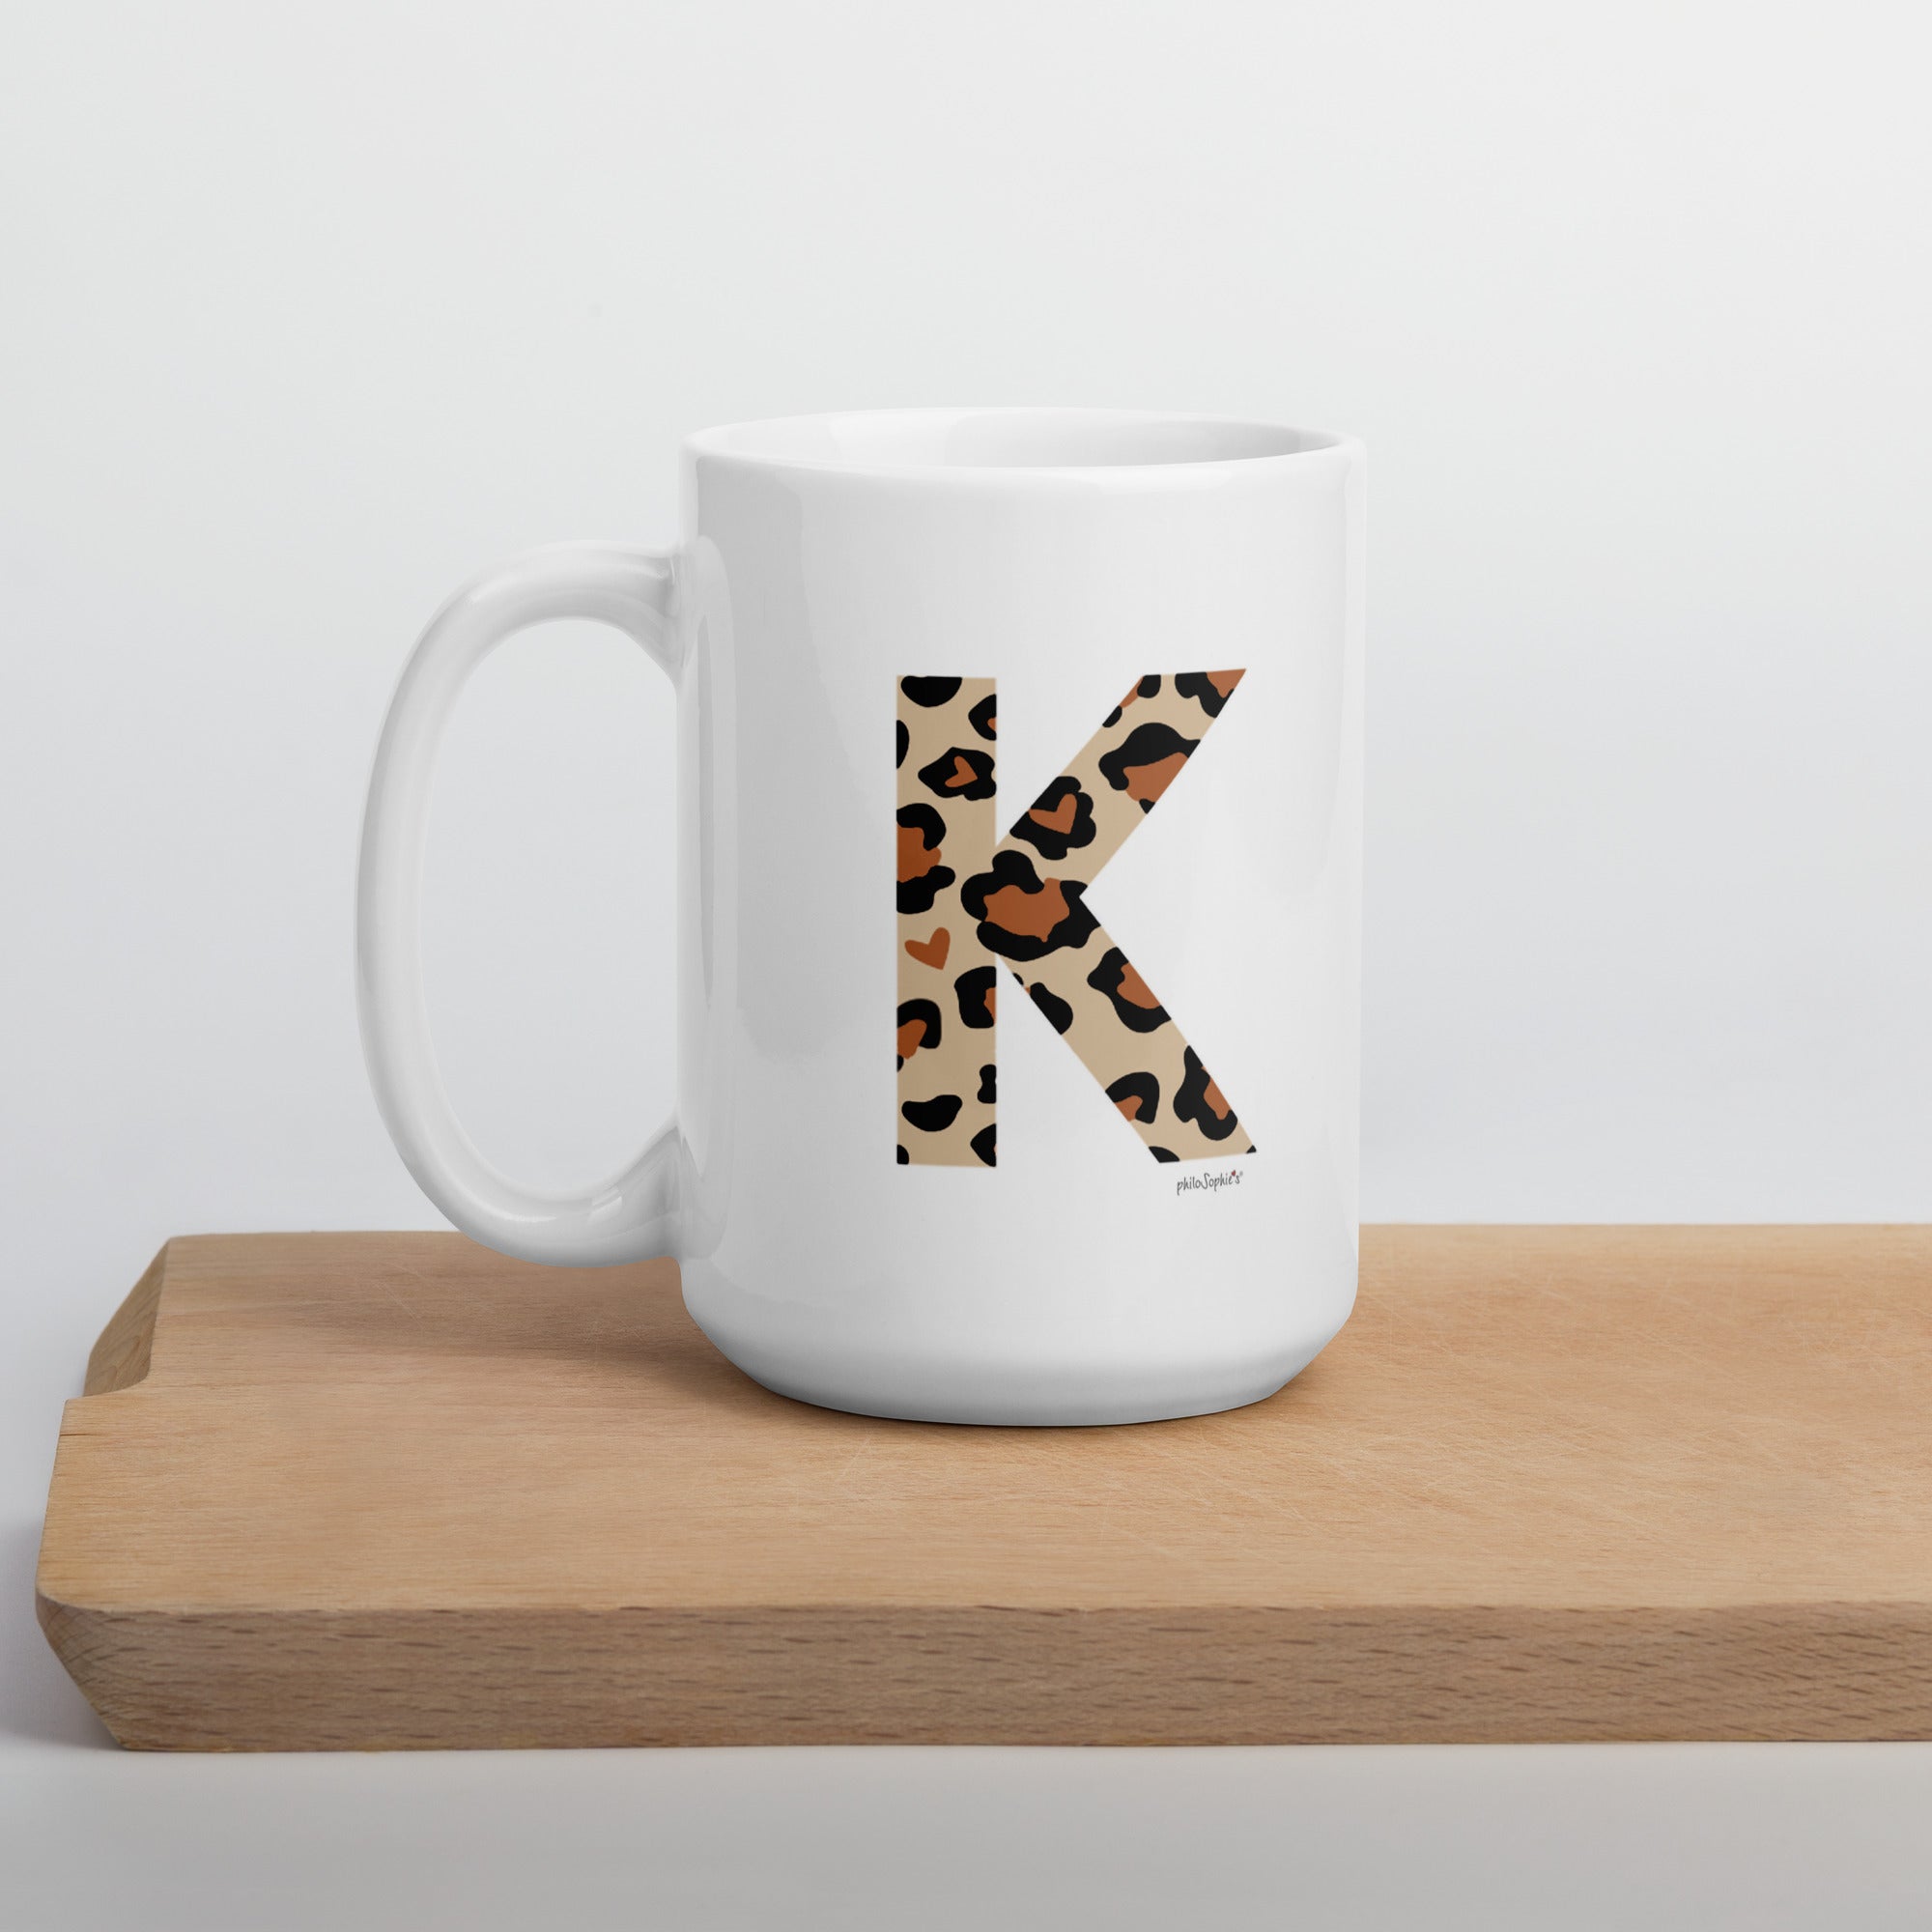 Love Letters: Leopard Initial personalized philoSophie's Ceramic Mug